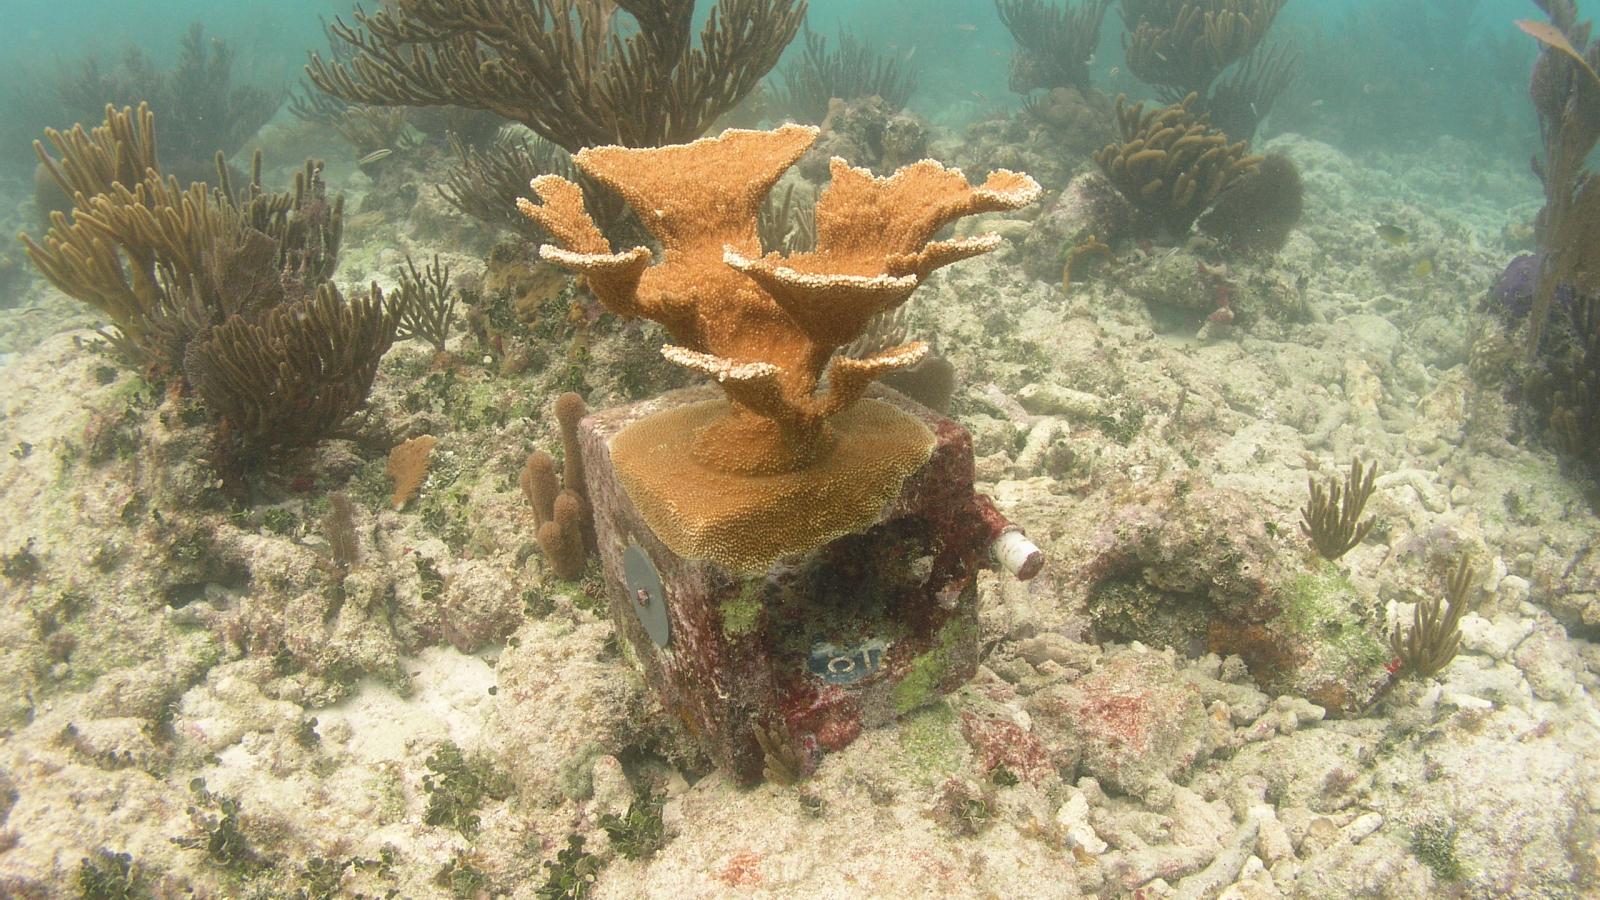 Acropora palmata experimental coral on a cinder block.